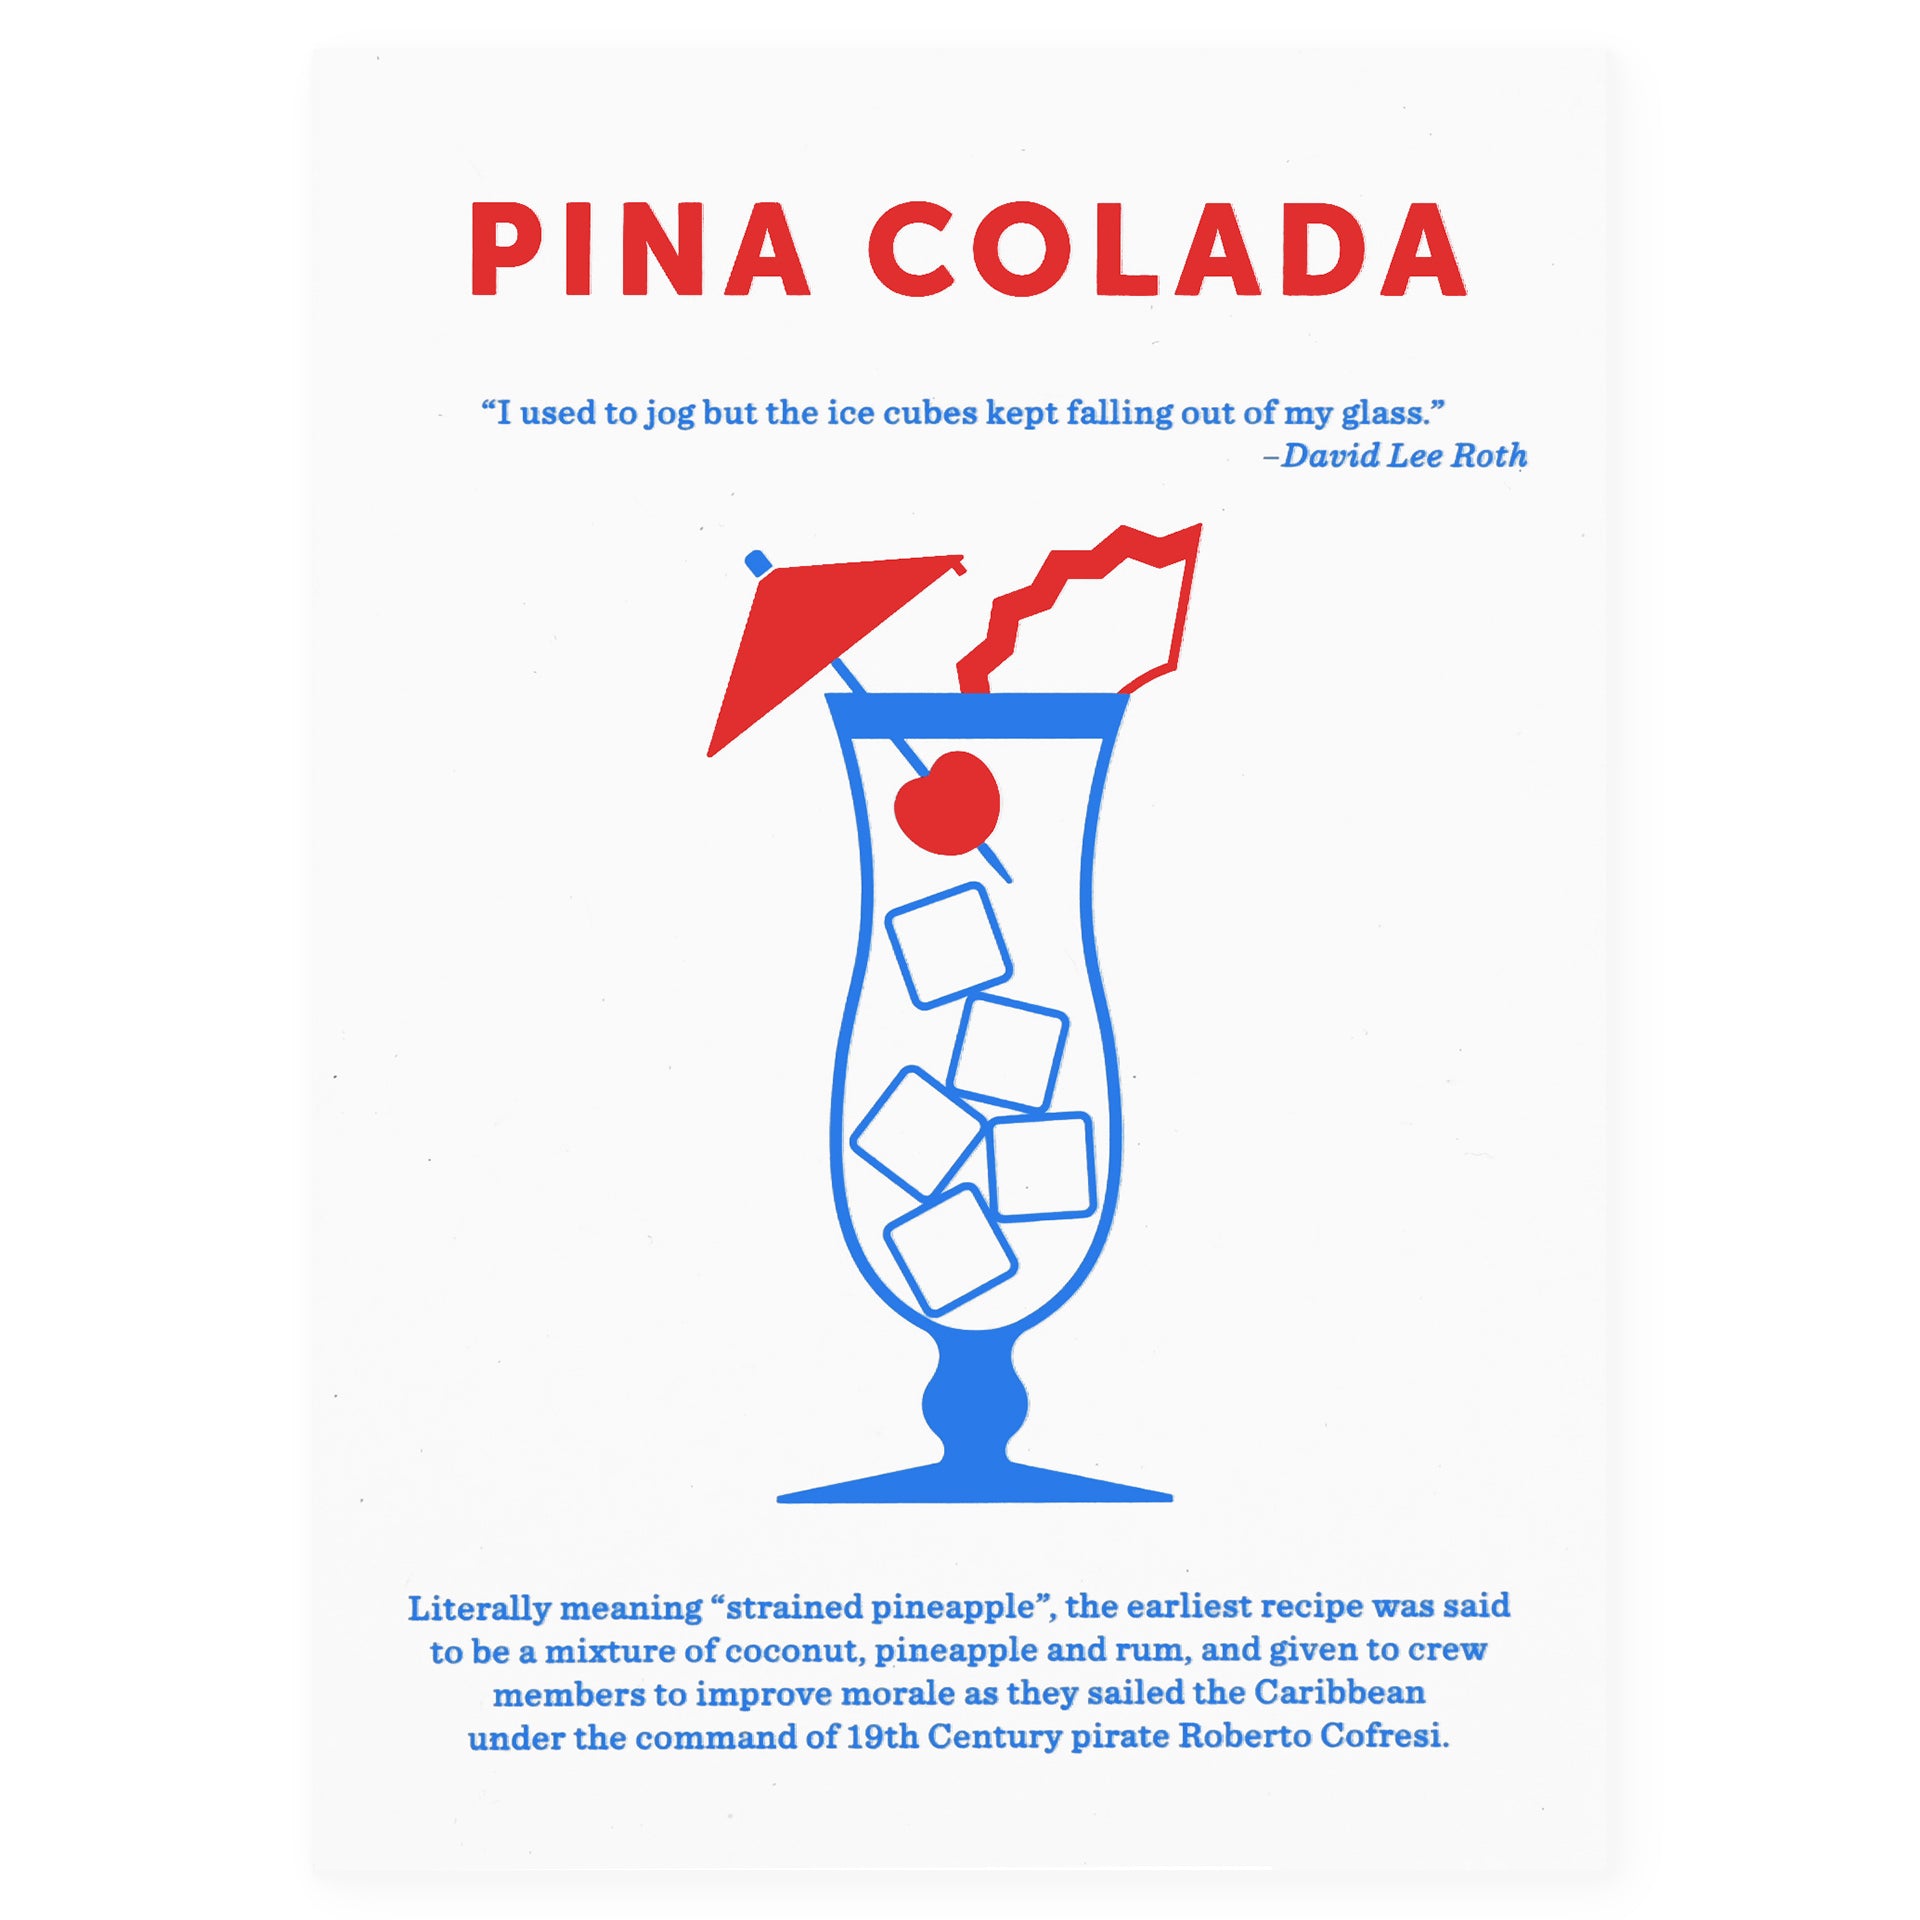 Crispin Finn Piña Colada Cocktail Greeting Card 